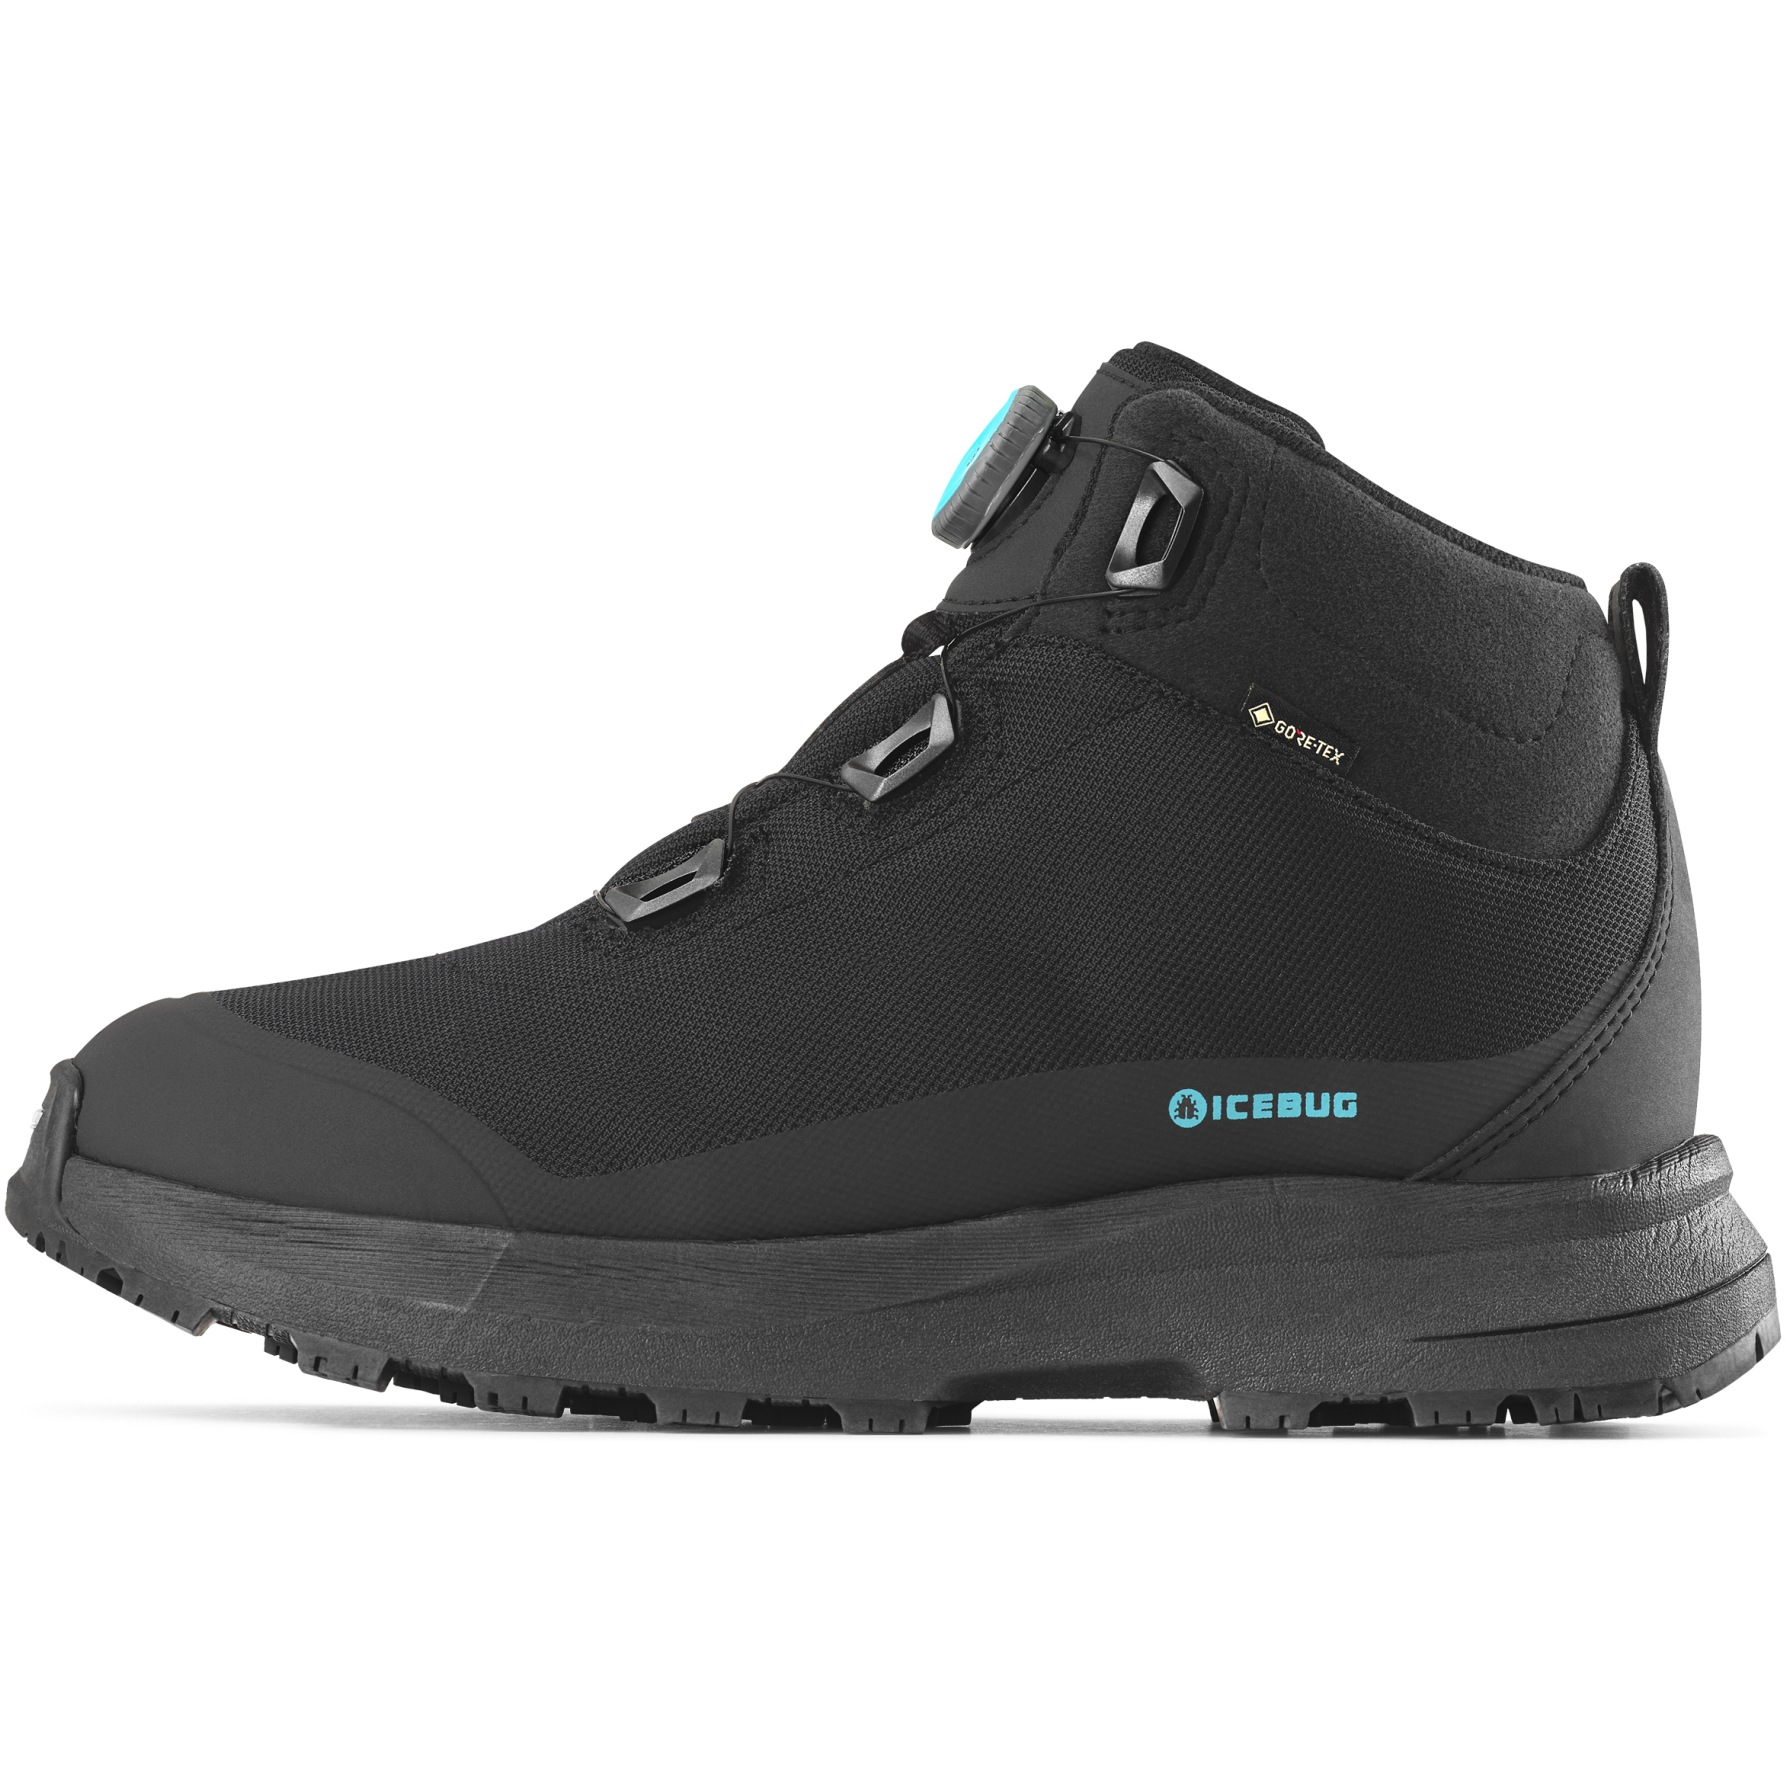 Picture of Icebug Stavre 2 Michelin GTX Hiking Shoes Women - black/jademist